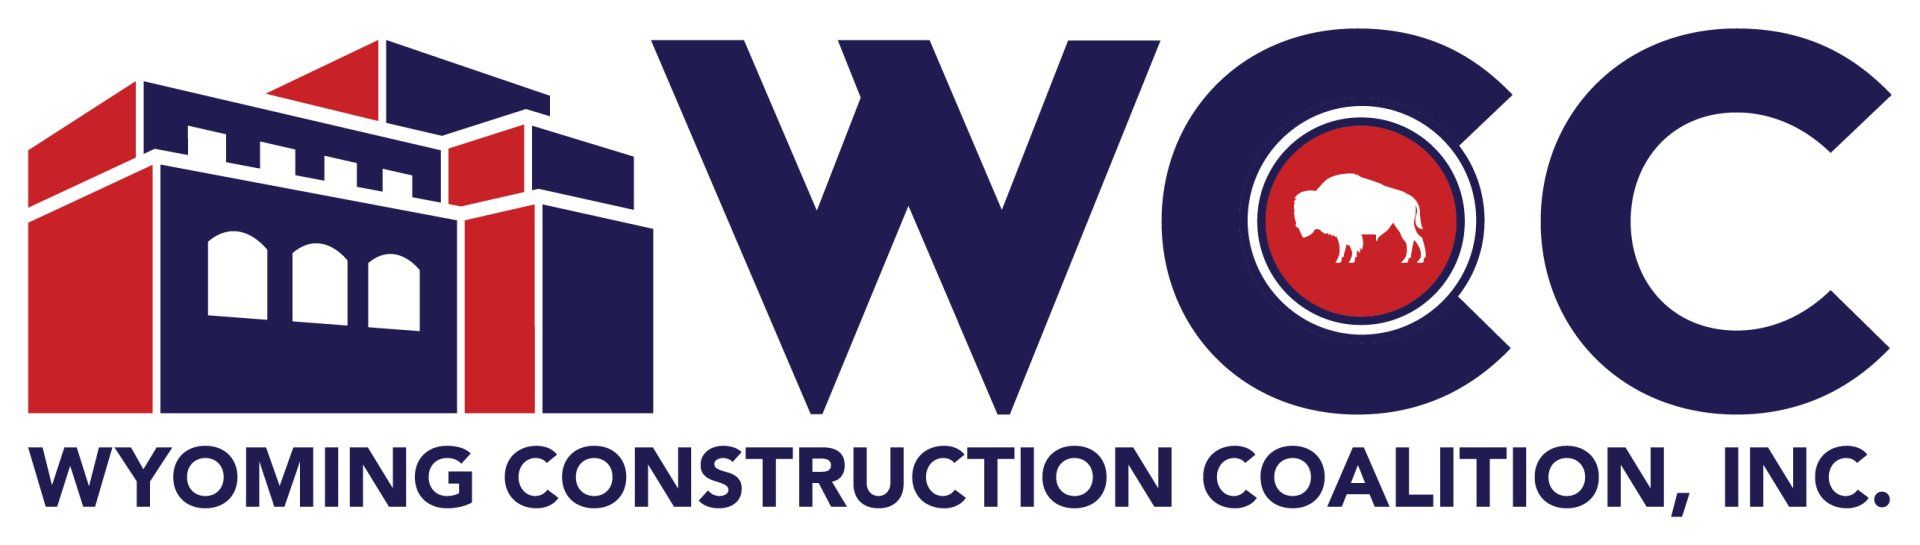 Wyoming Construction Coalition, INC.